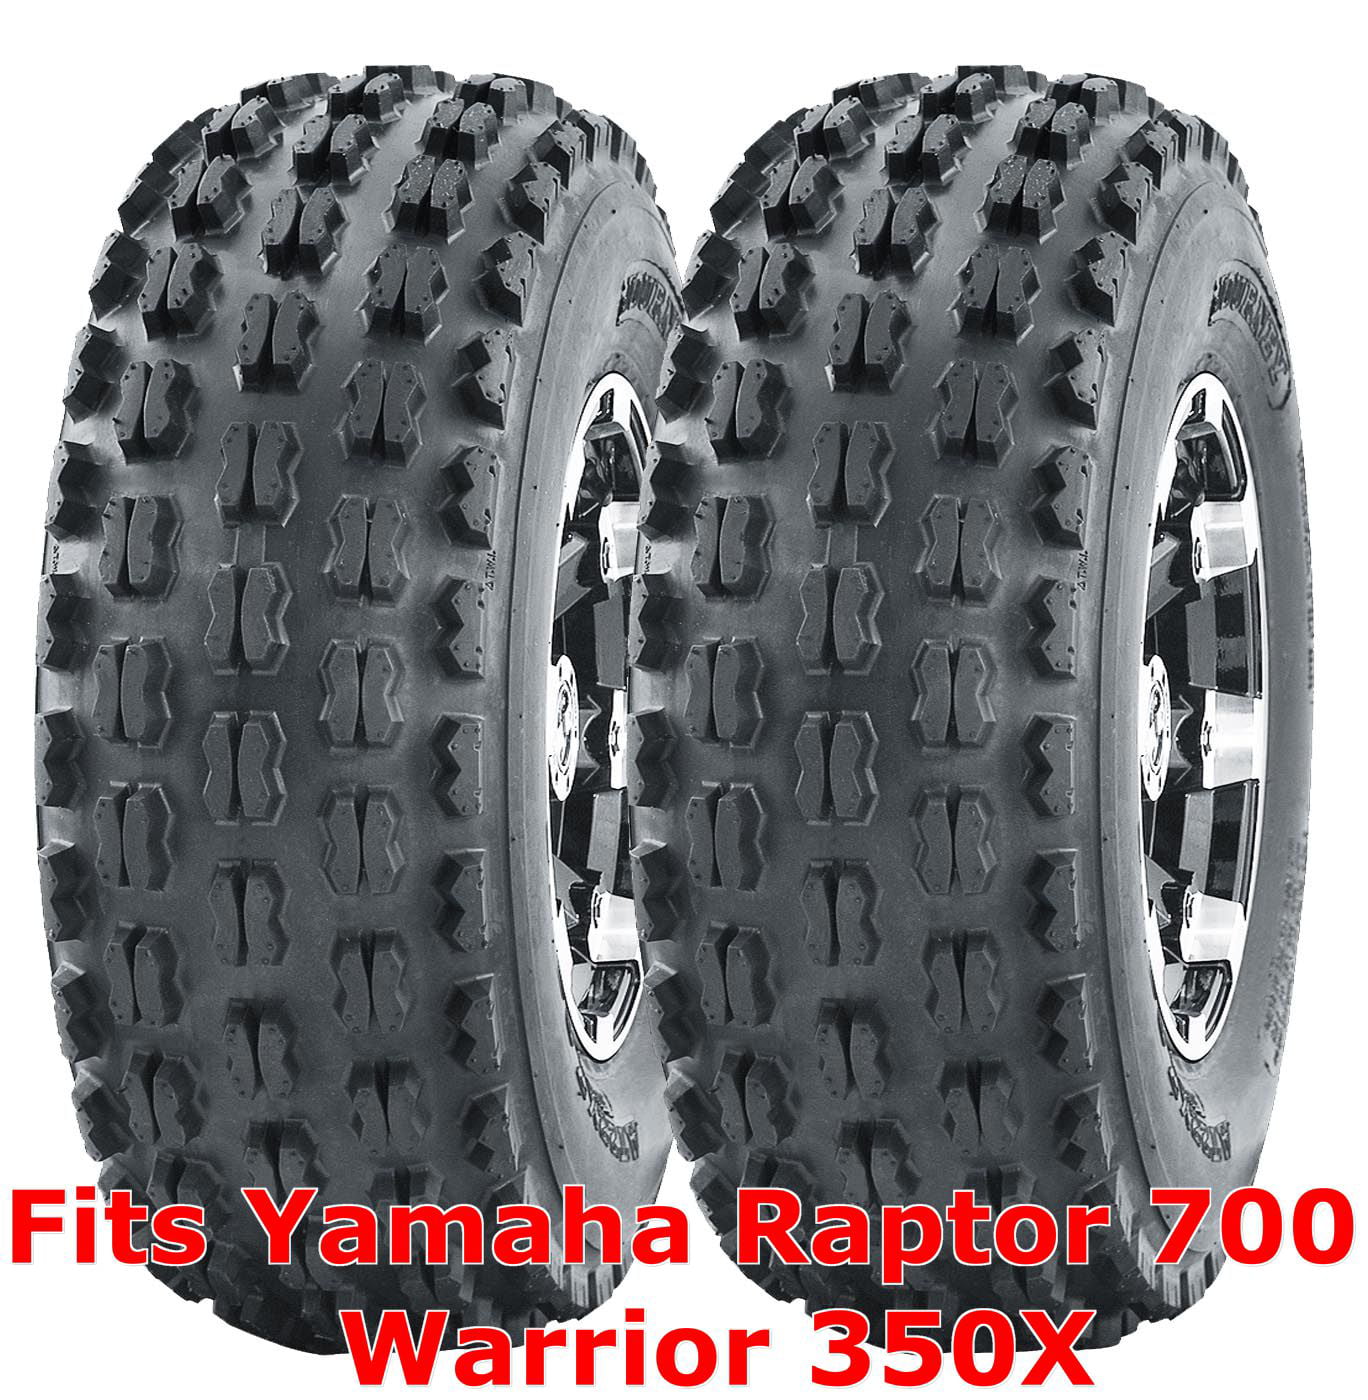 20X10-9 4PLY OCELOT ATV TIRES YAMAHA 700R RAPTOR FULL COMPLETE SET 21X7-10 